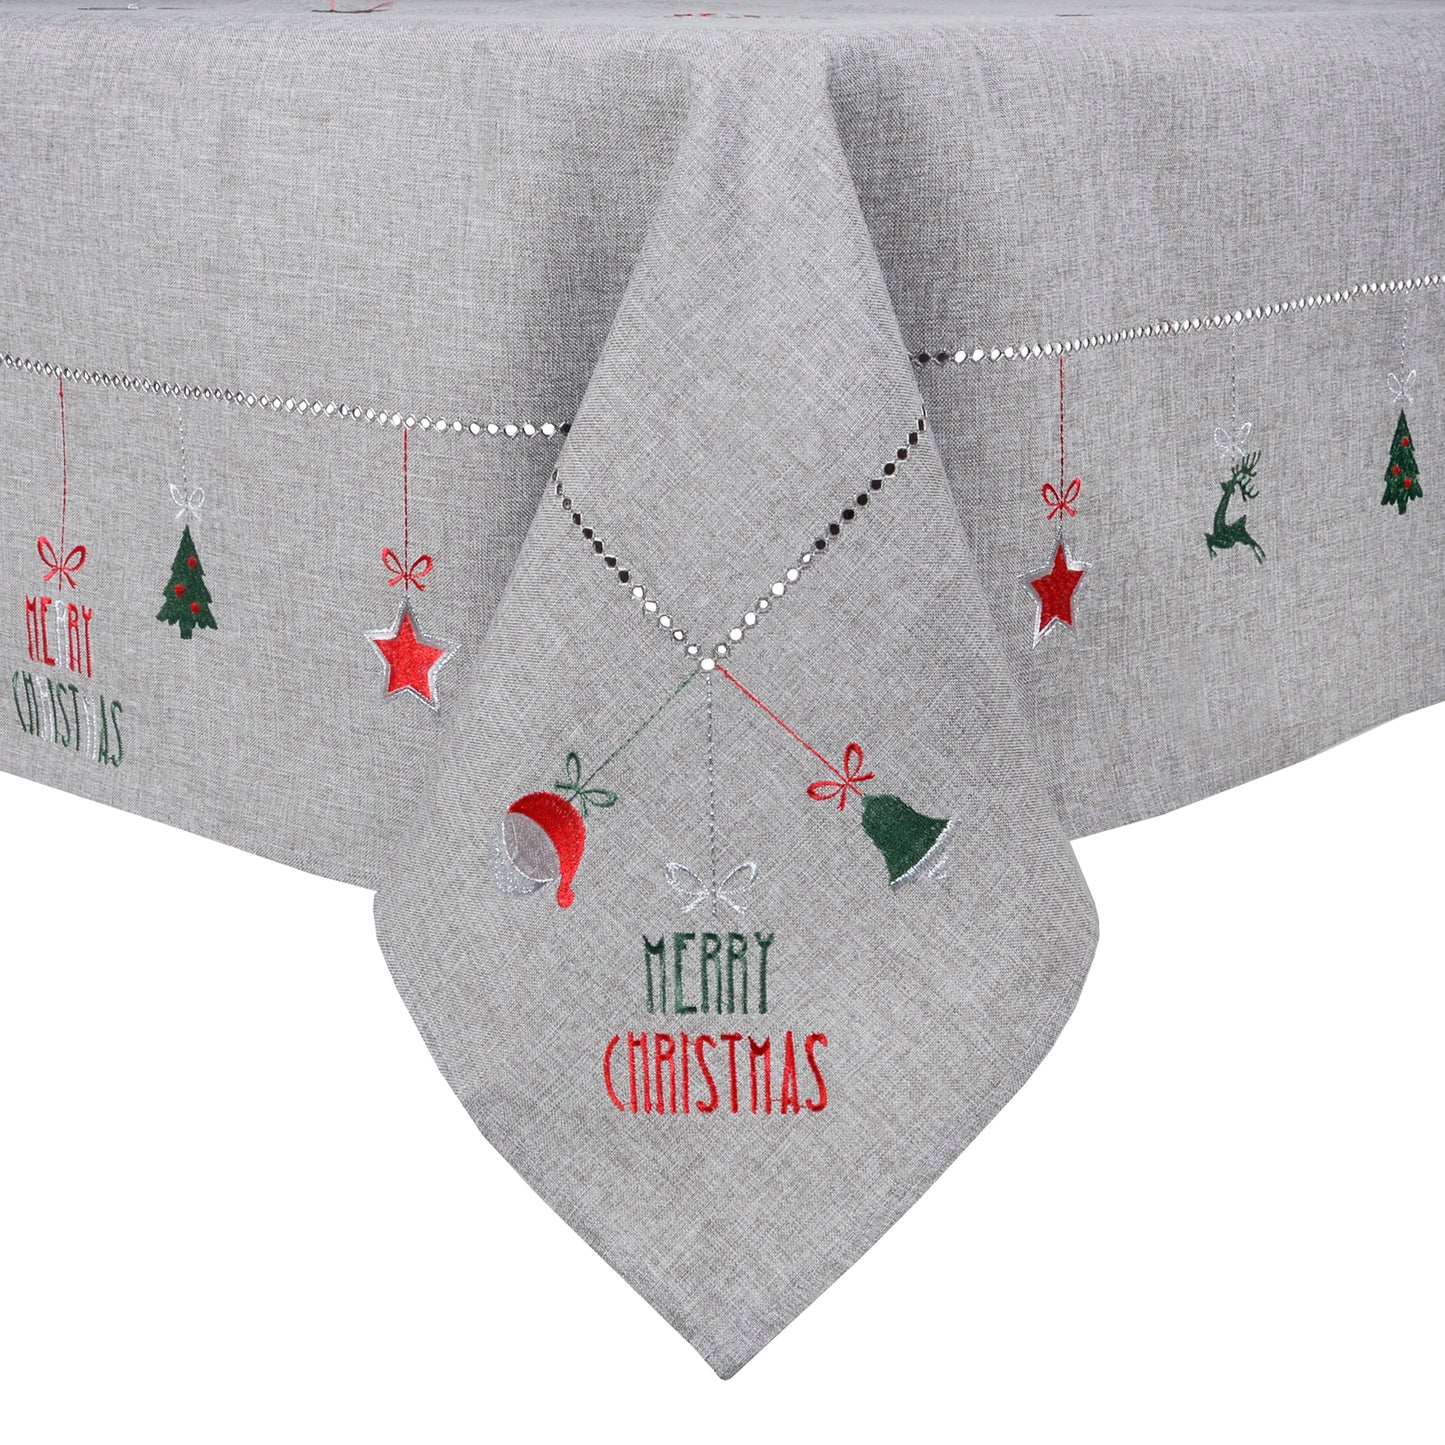 Mr Crimbo Fun Merry Christmas Embroidered Tablecloth - MrCrimbo.co.uk -XS5898 - Grey -christmas home decor